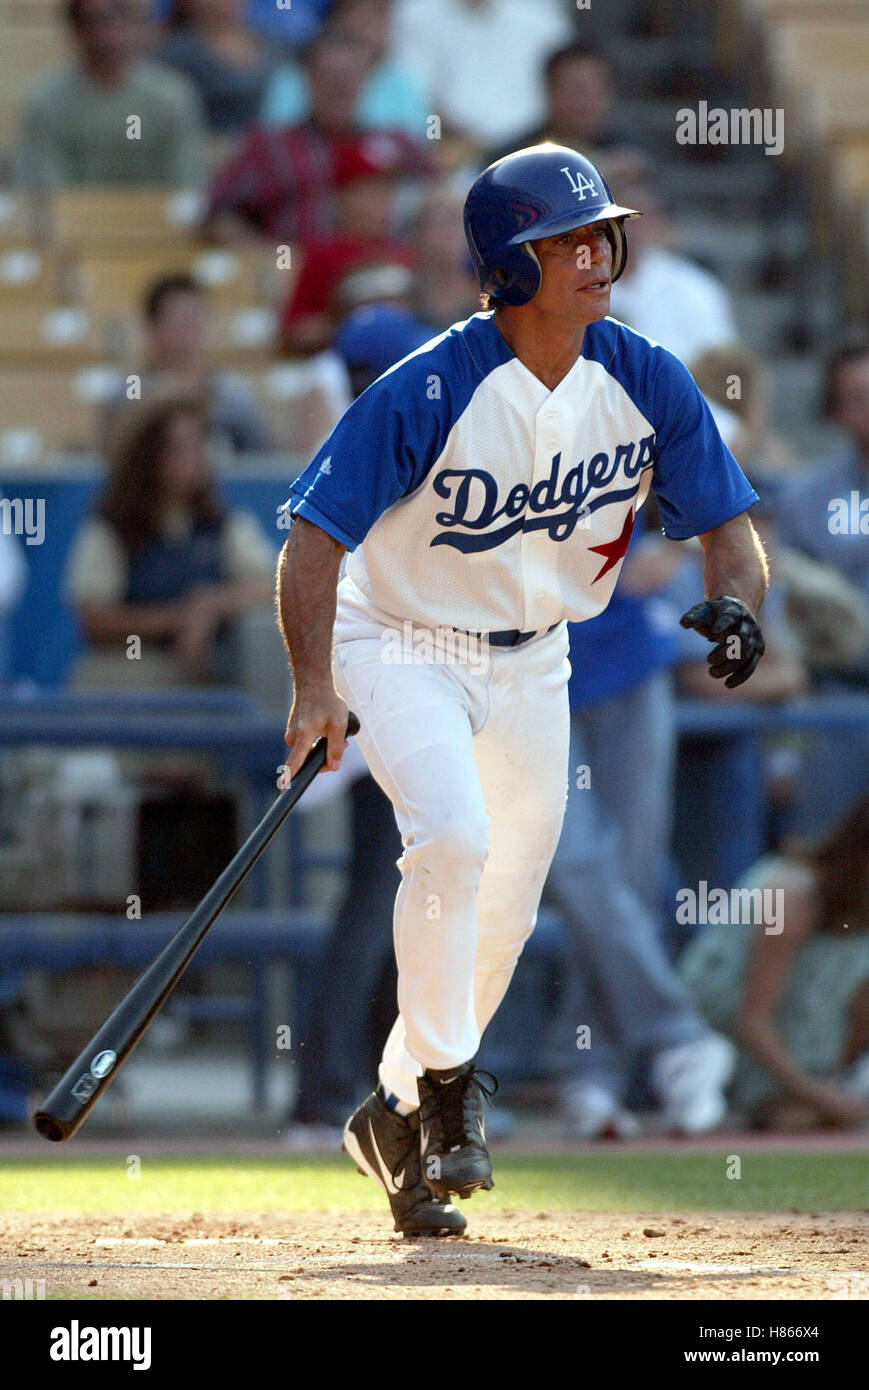 Tony Danza Baseball High Resolution Stock Photography and Images - Alamy